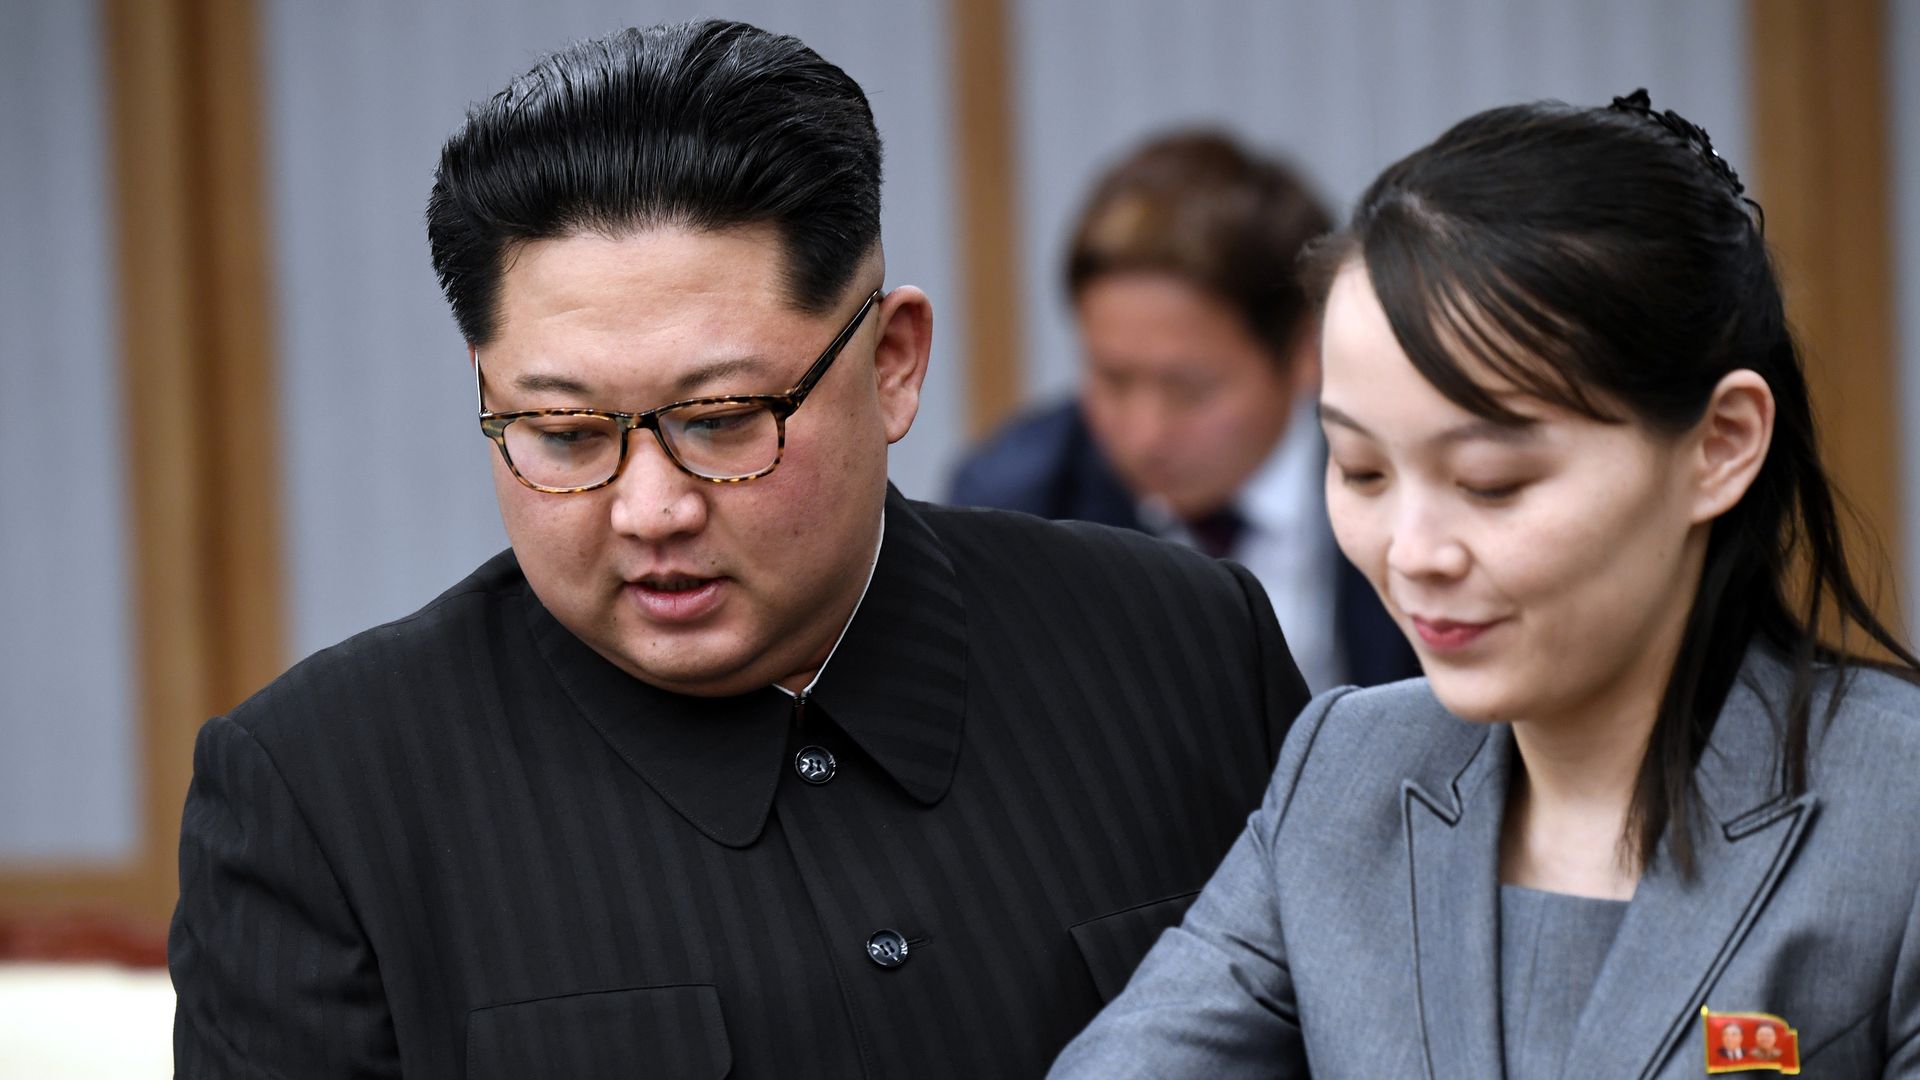 North Koraen Leader Kim Jong Un (L) and sister Kim Yo Jong attend the Inter-Korean Summit at the Peace House on April 27, 2018 in Panmunjom, South Korea. 